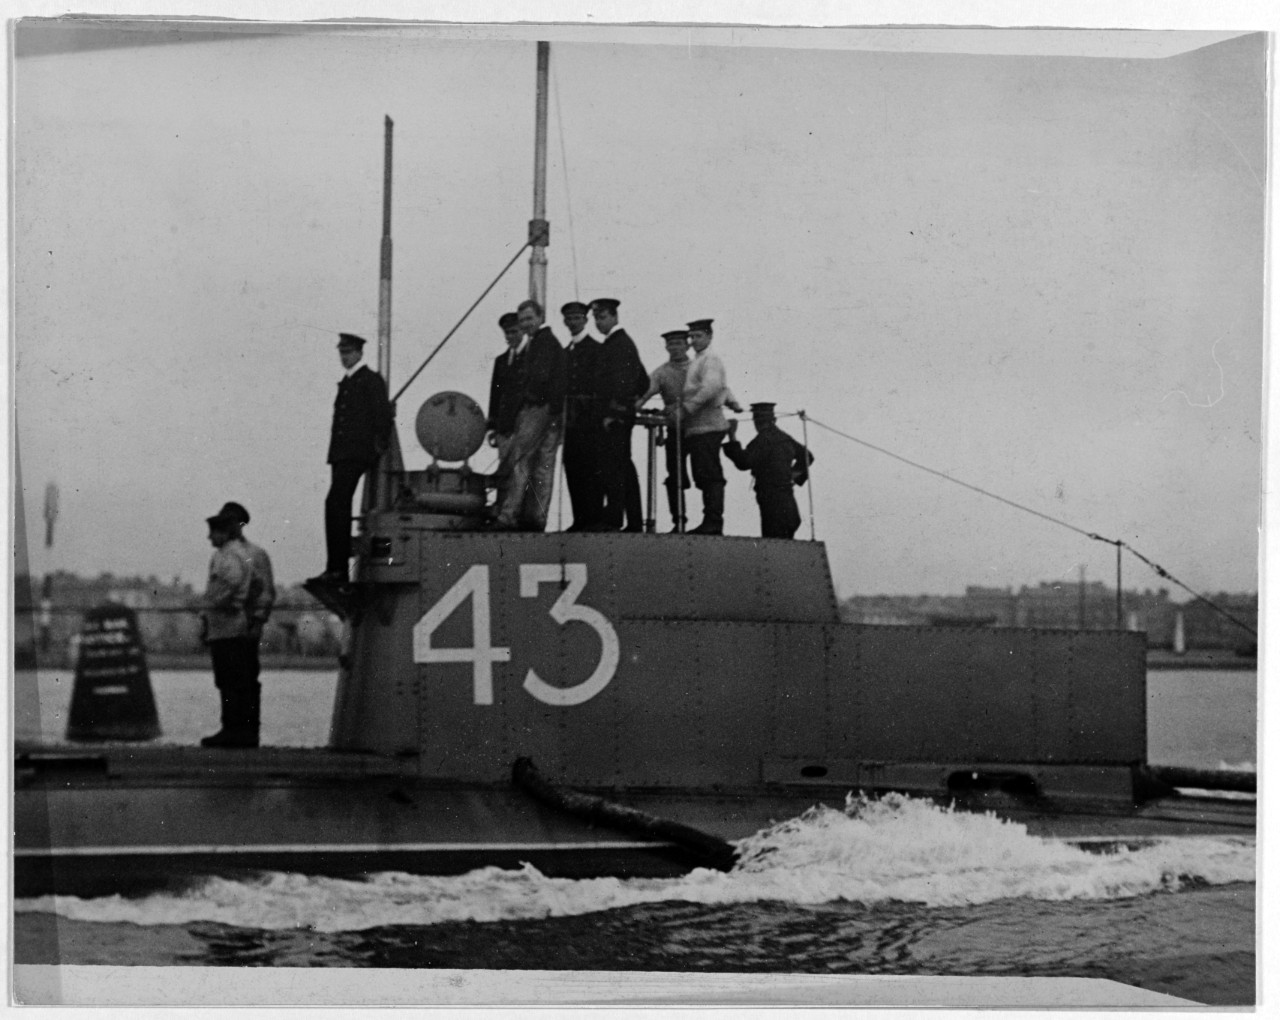 C-13 (British submarine, 1907-1920)